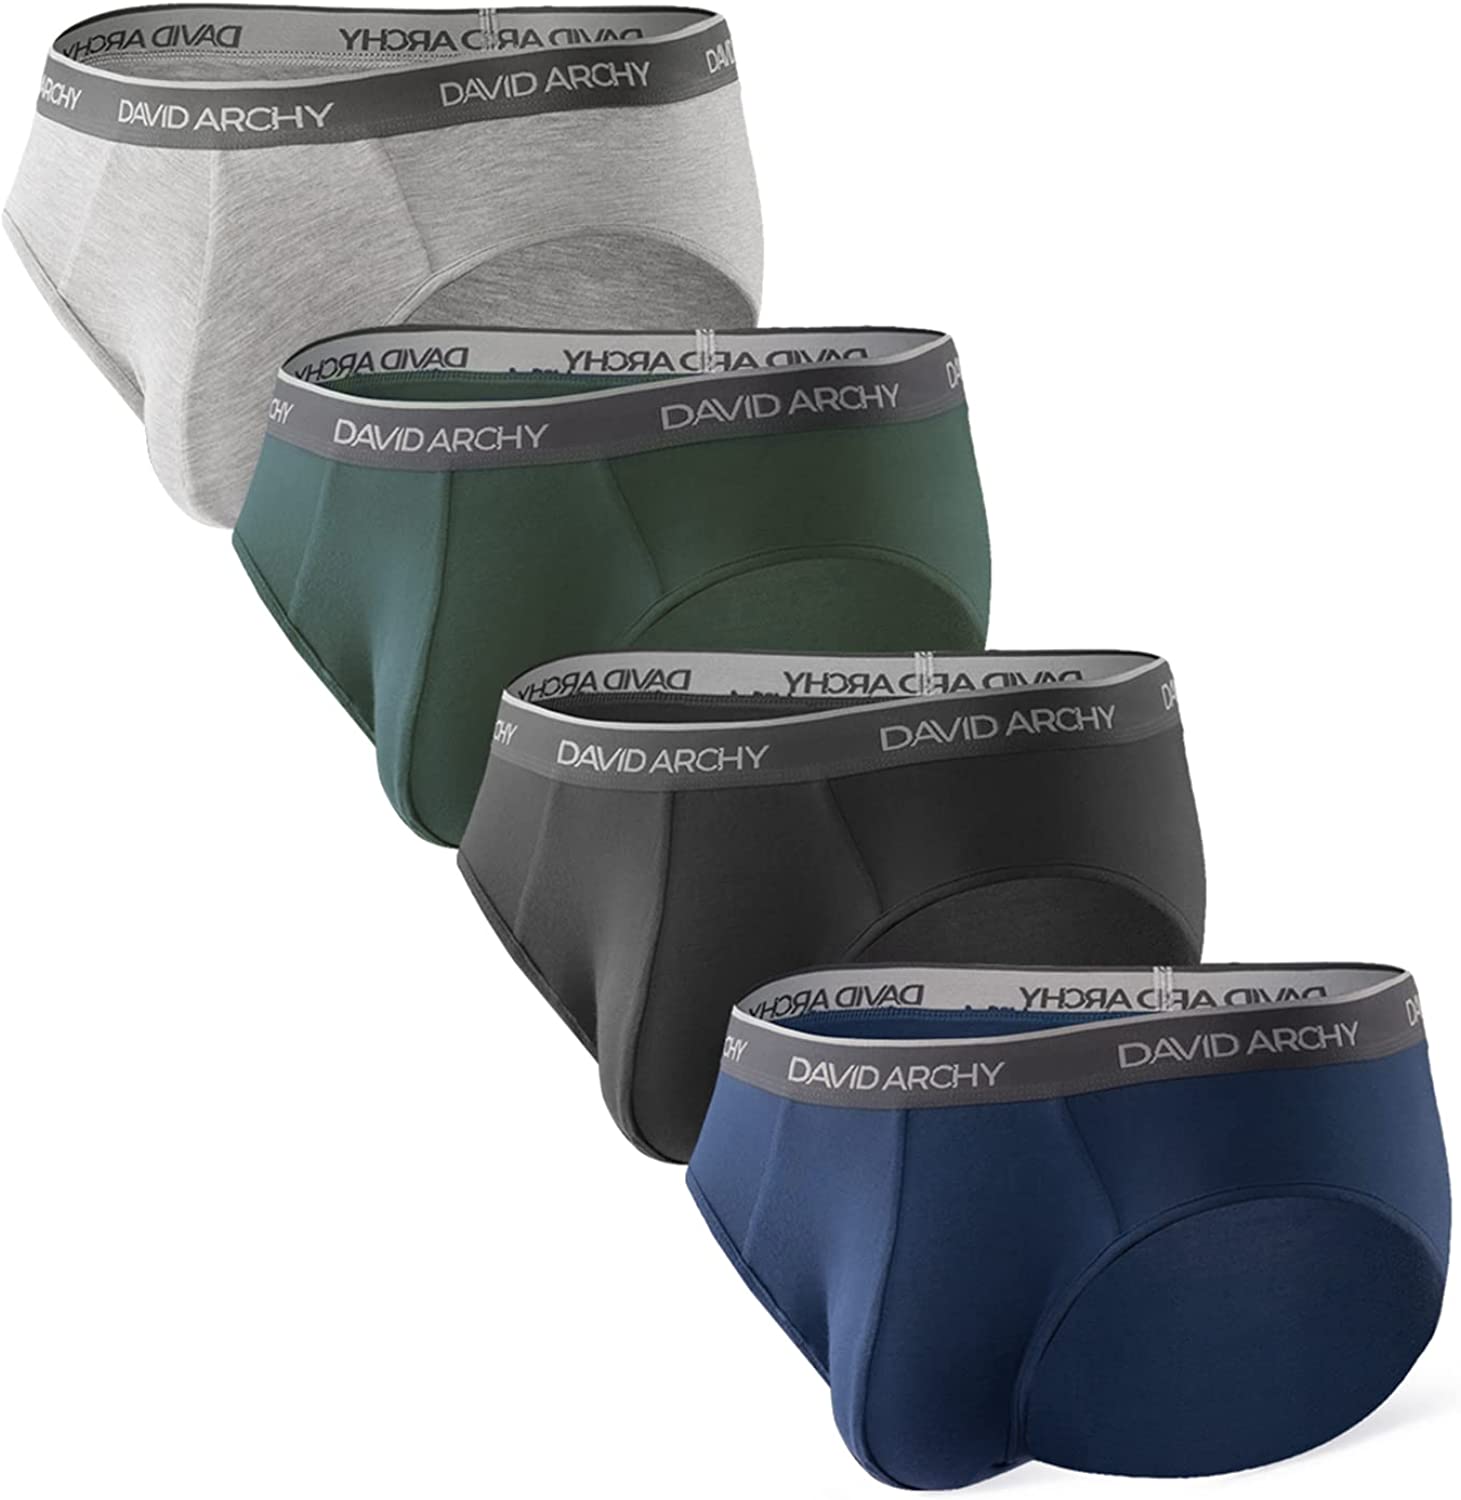 DAVID ARCHY Men's Underwear Bamboo Rayon Breathable Super Soft Comfort  Lightweig